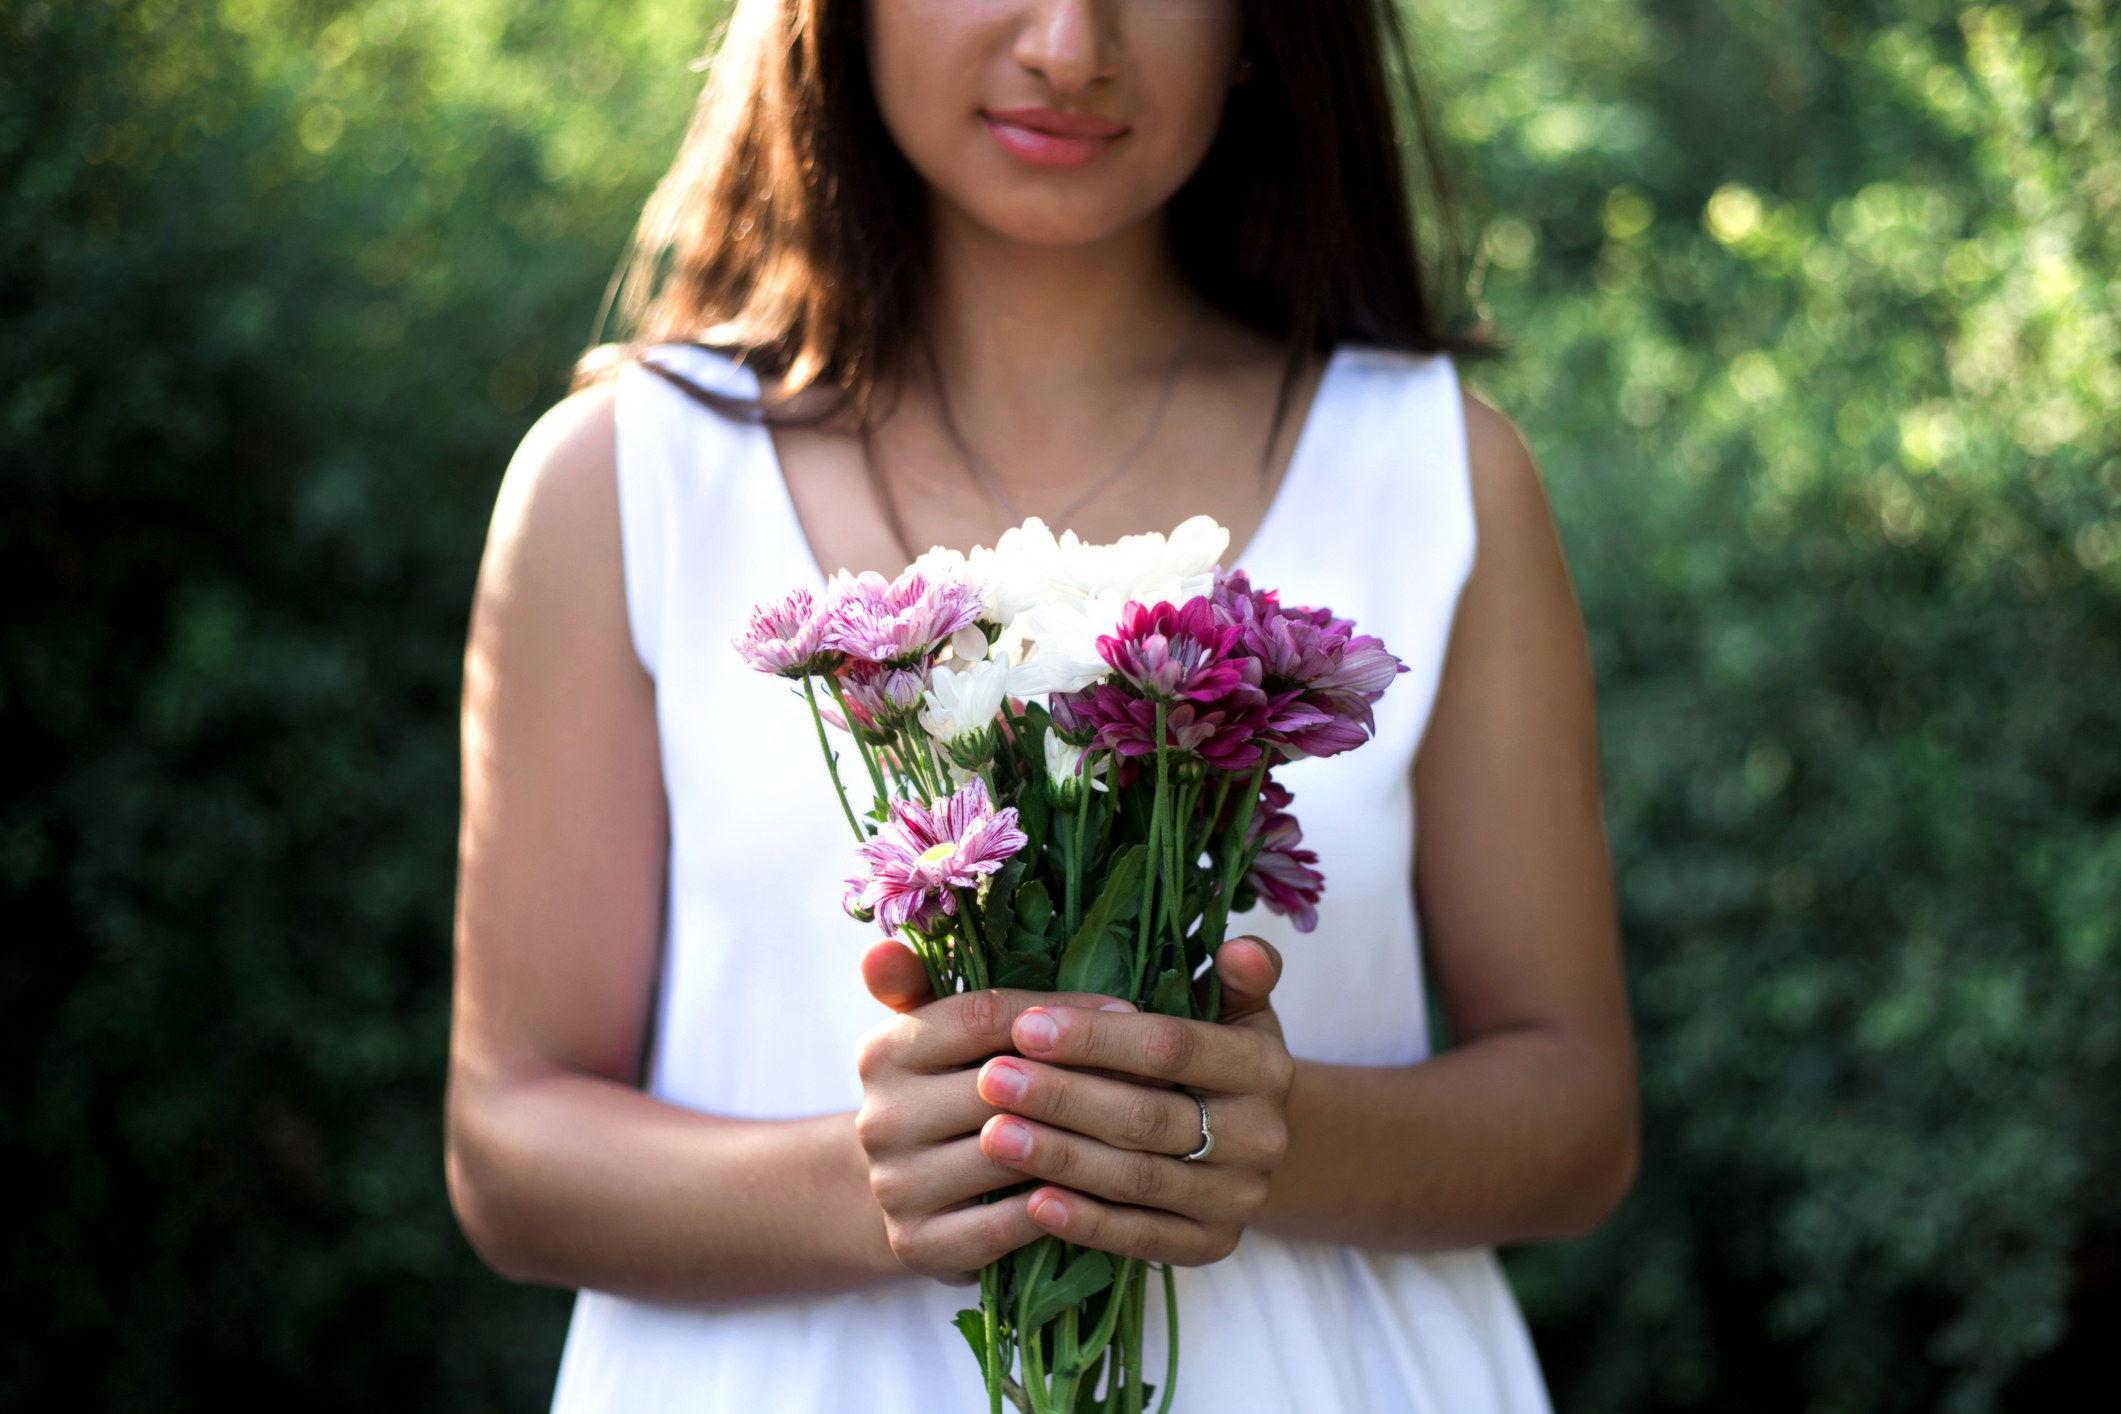 A woman holding a bouquet